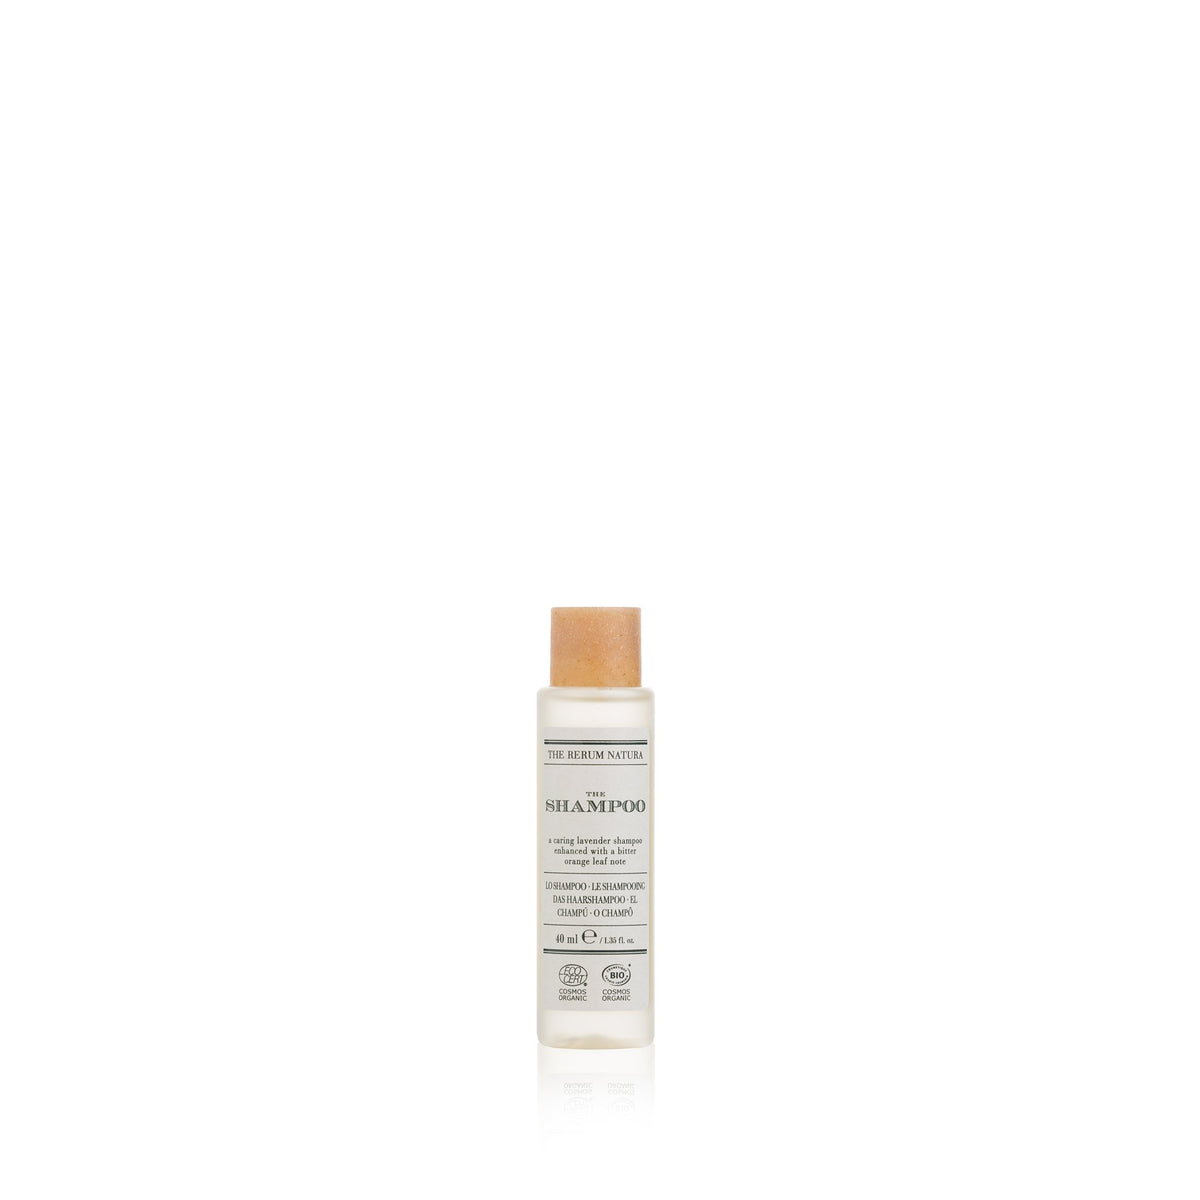 The rerum natura organic certified shampoo (1.35 Fluid Ounce)